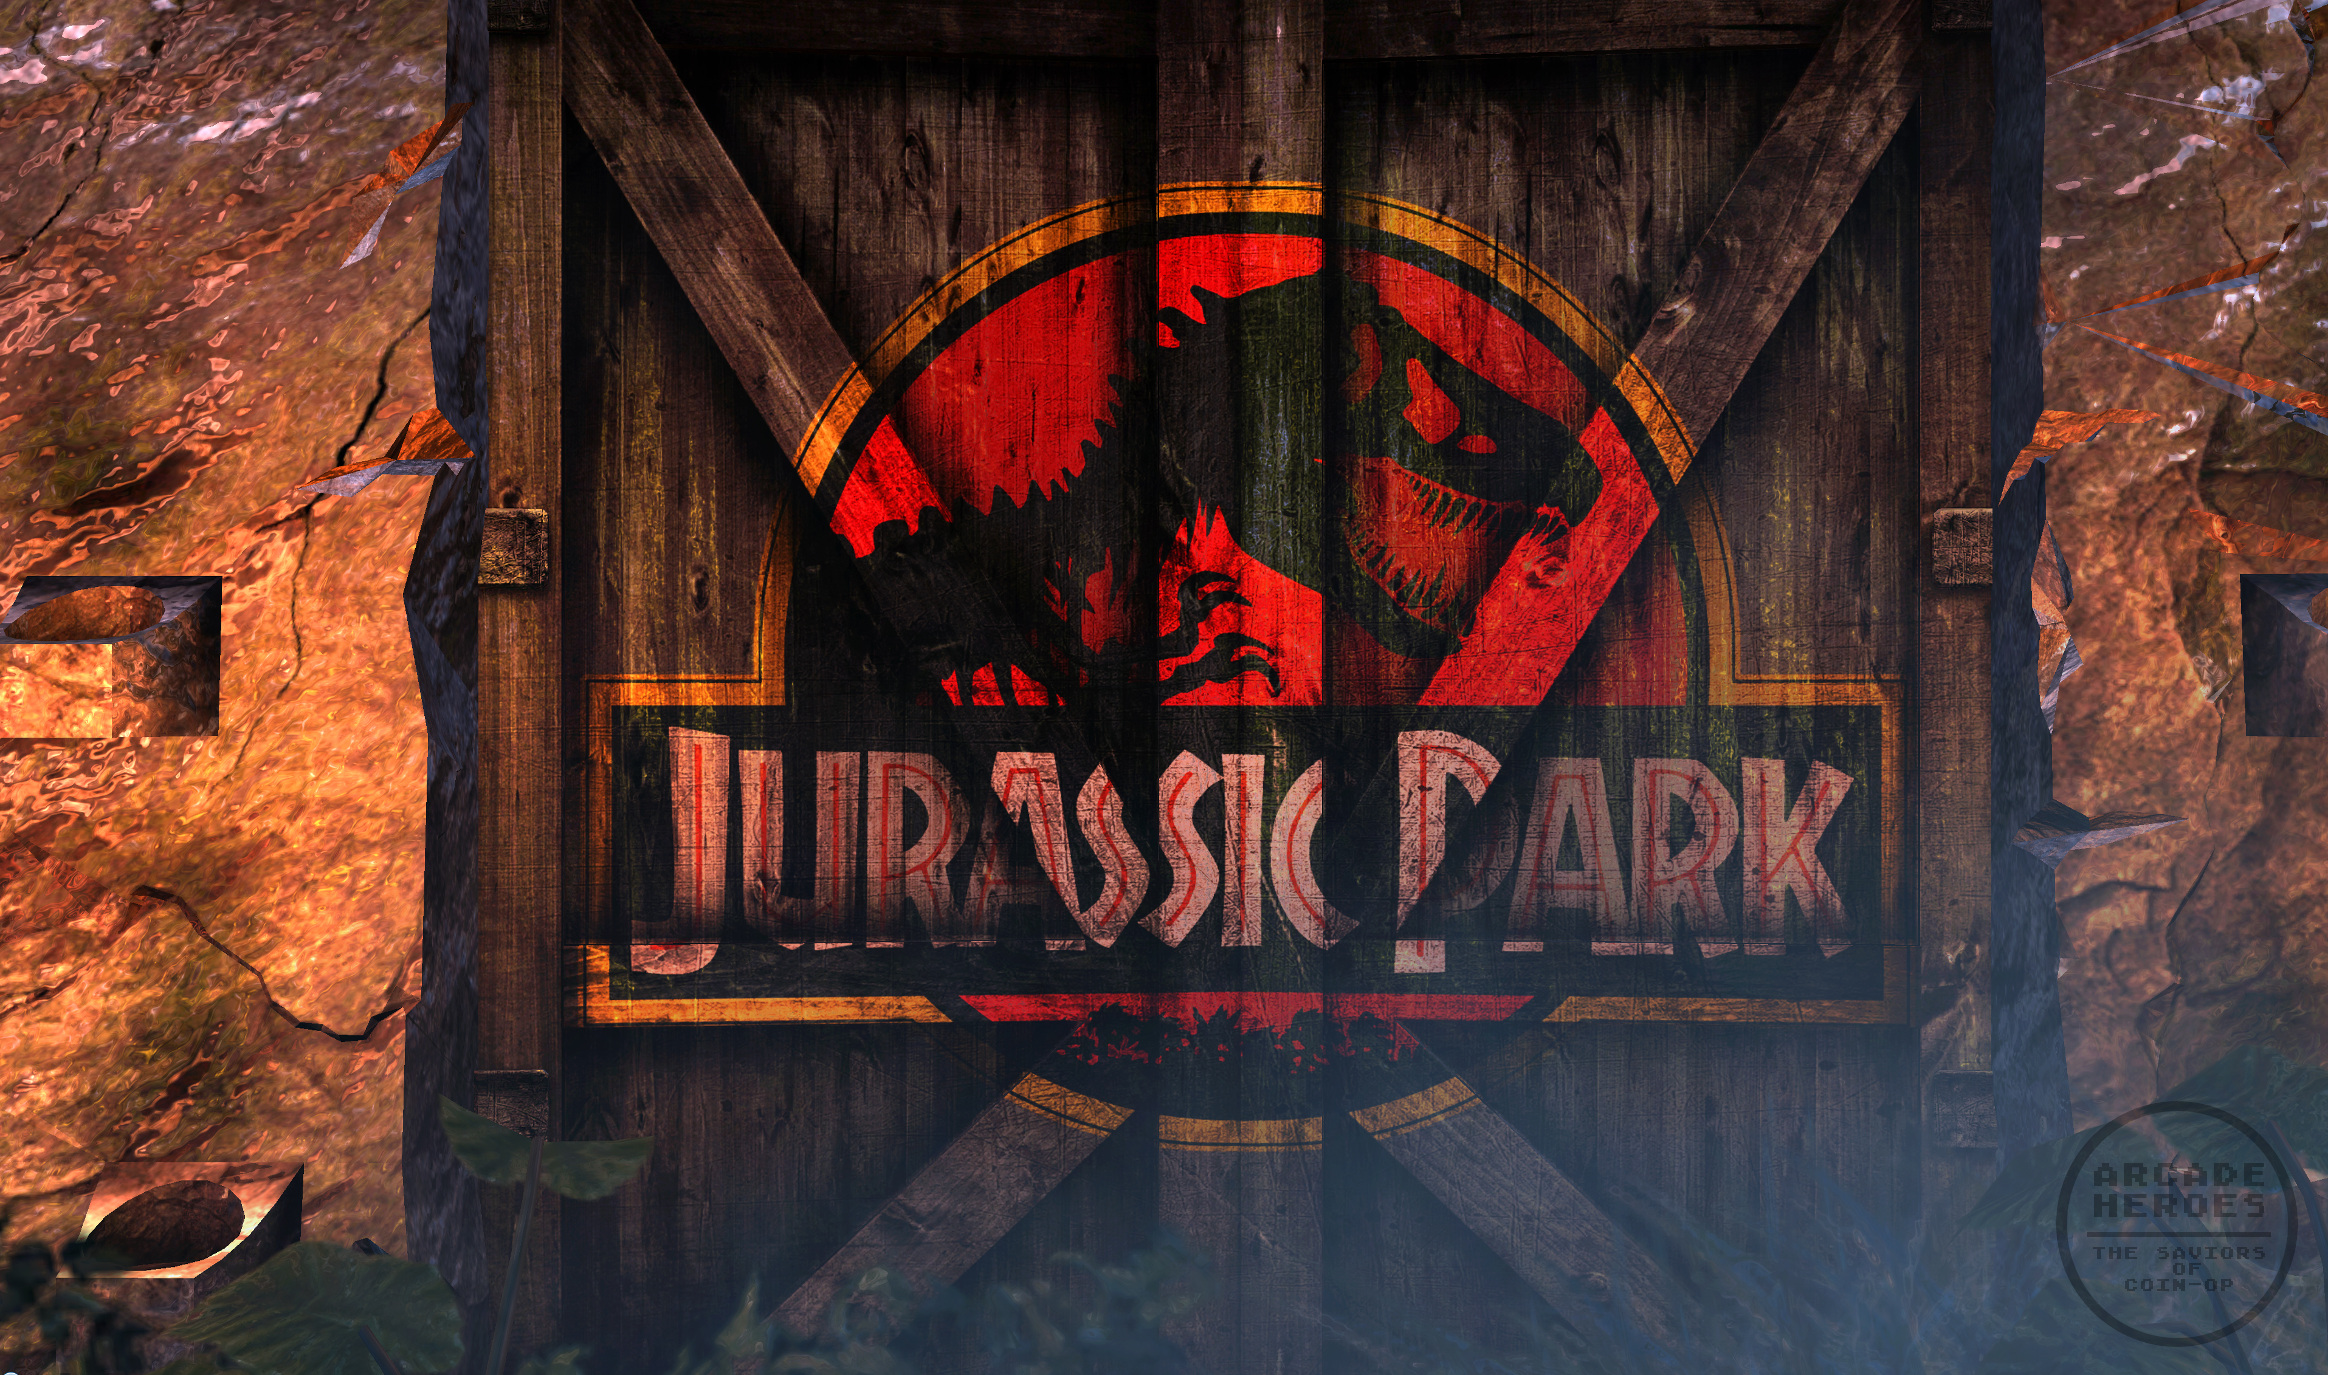 Arcade de Jurassic Park